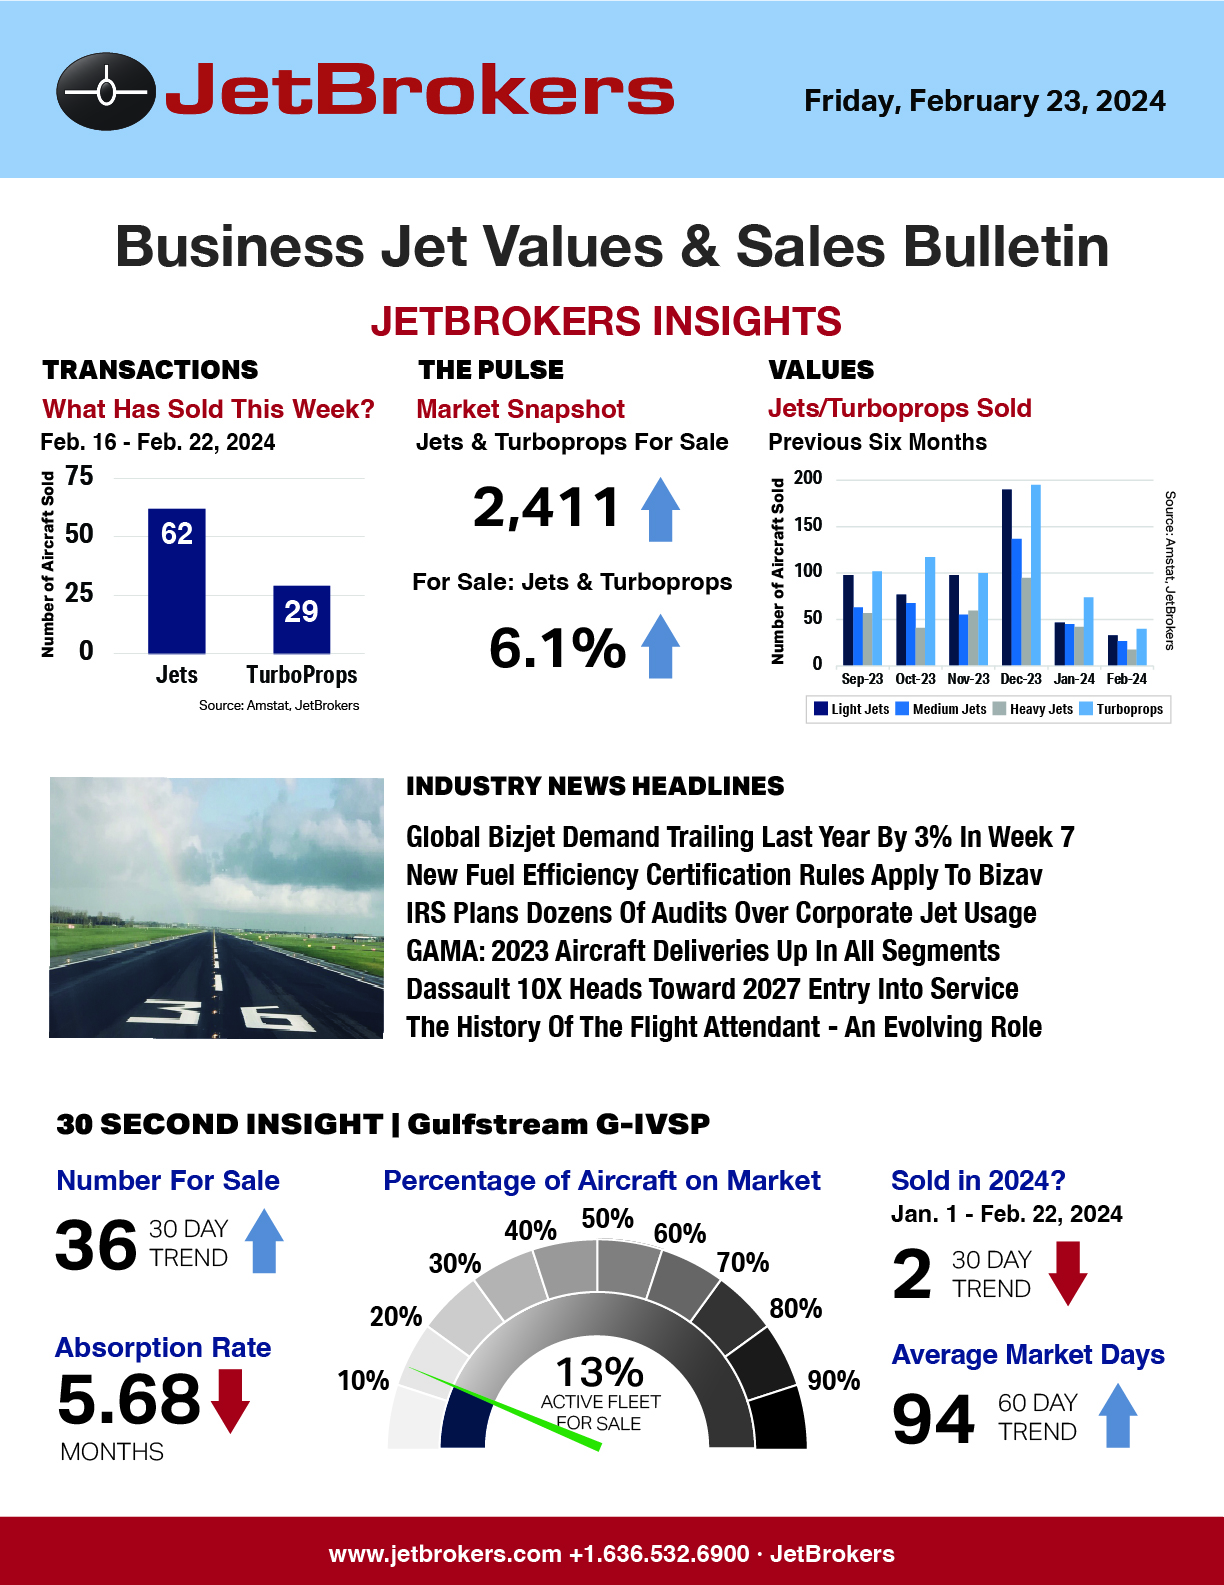 JetBrokers Business Jet Values & Sales Bulletin - February 23, 2024